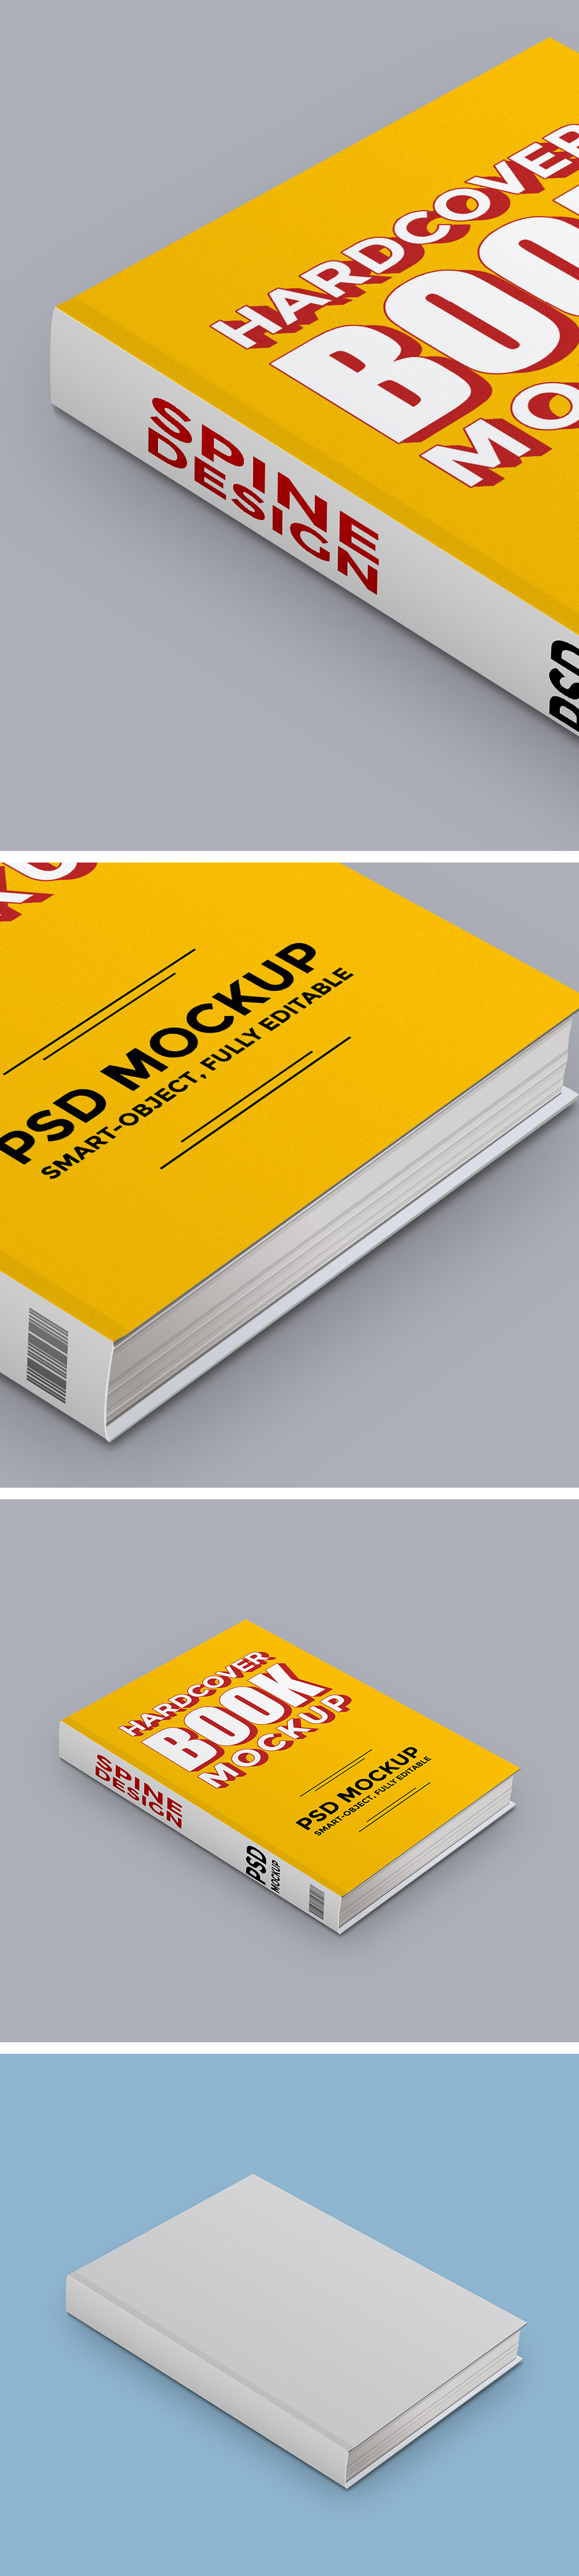 Hardcover Book PSD Mockup